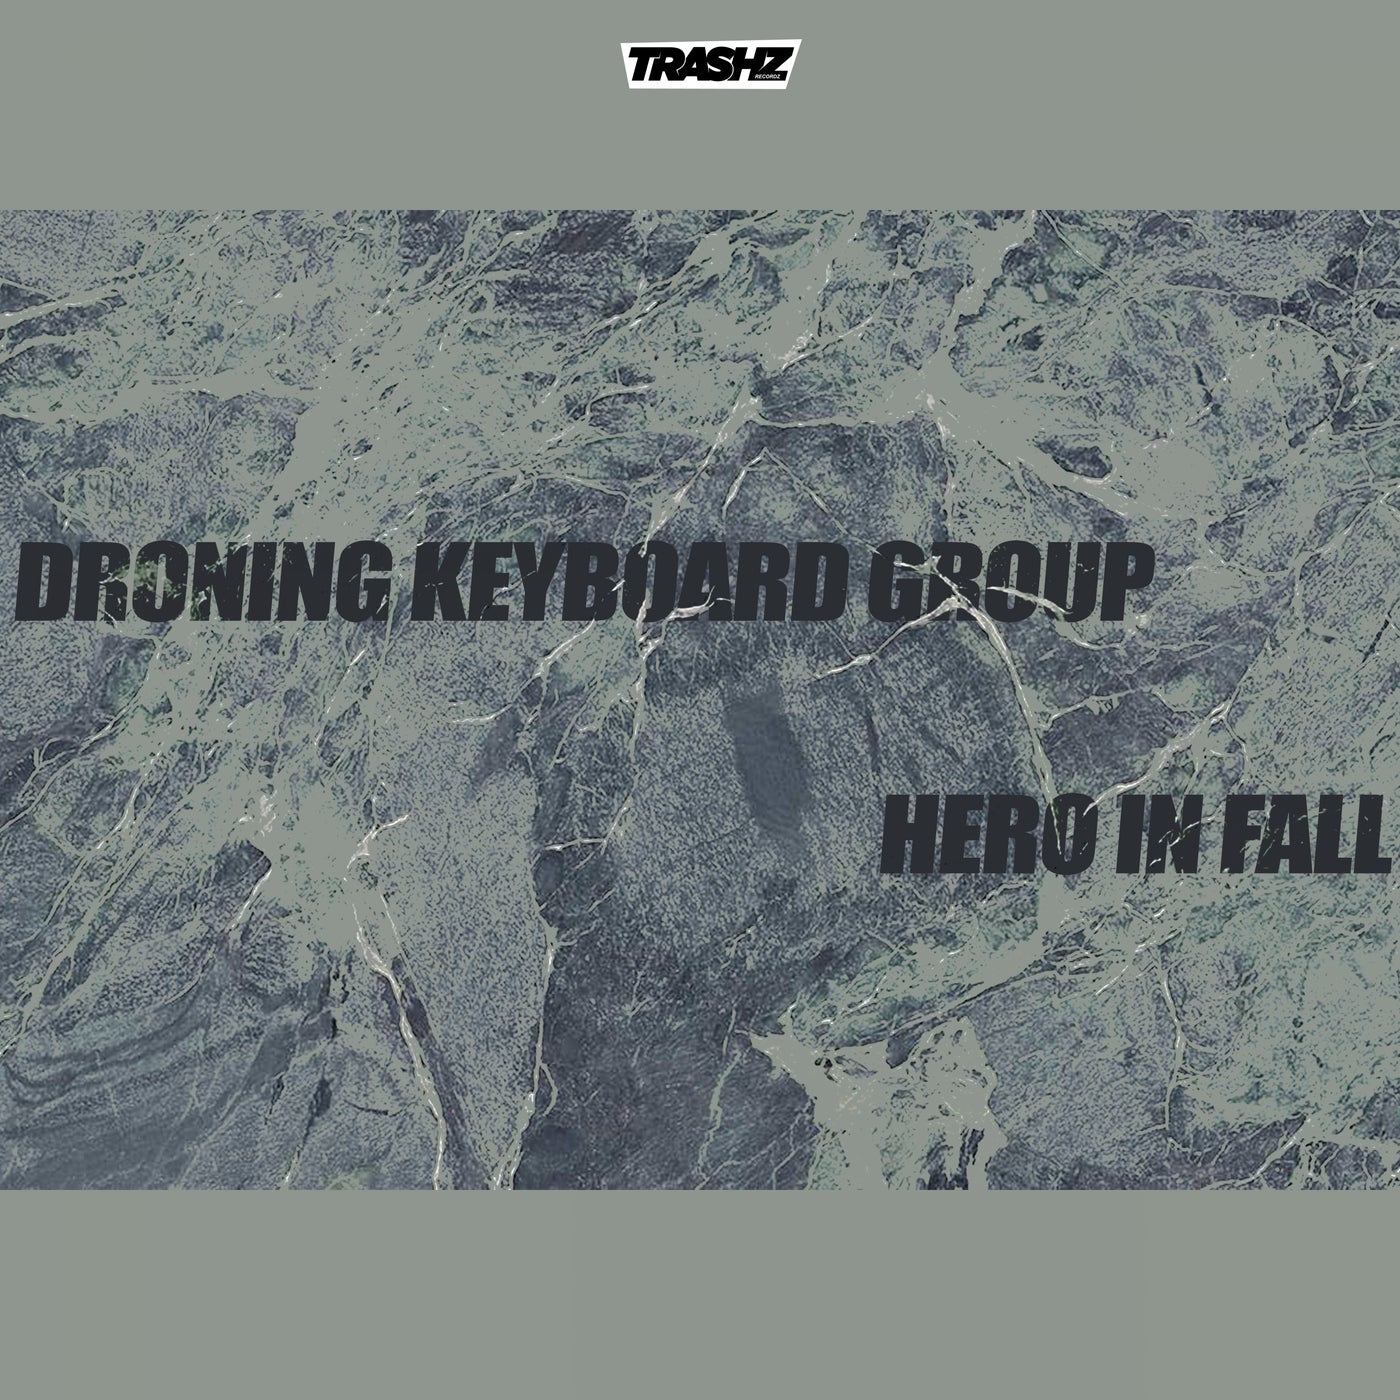 Droning Keyboard Group - Hero in Fall [RCRDZ127]